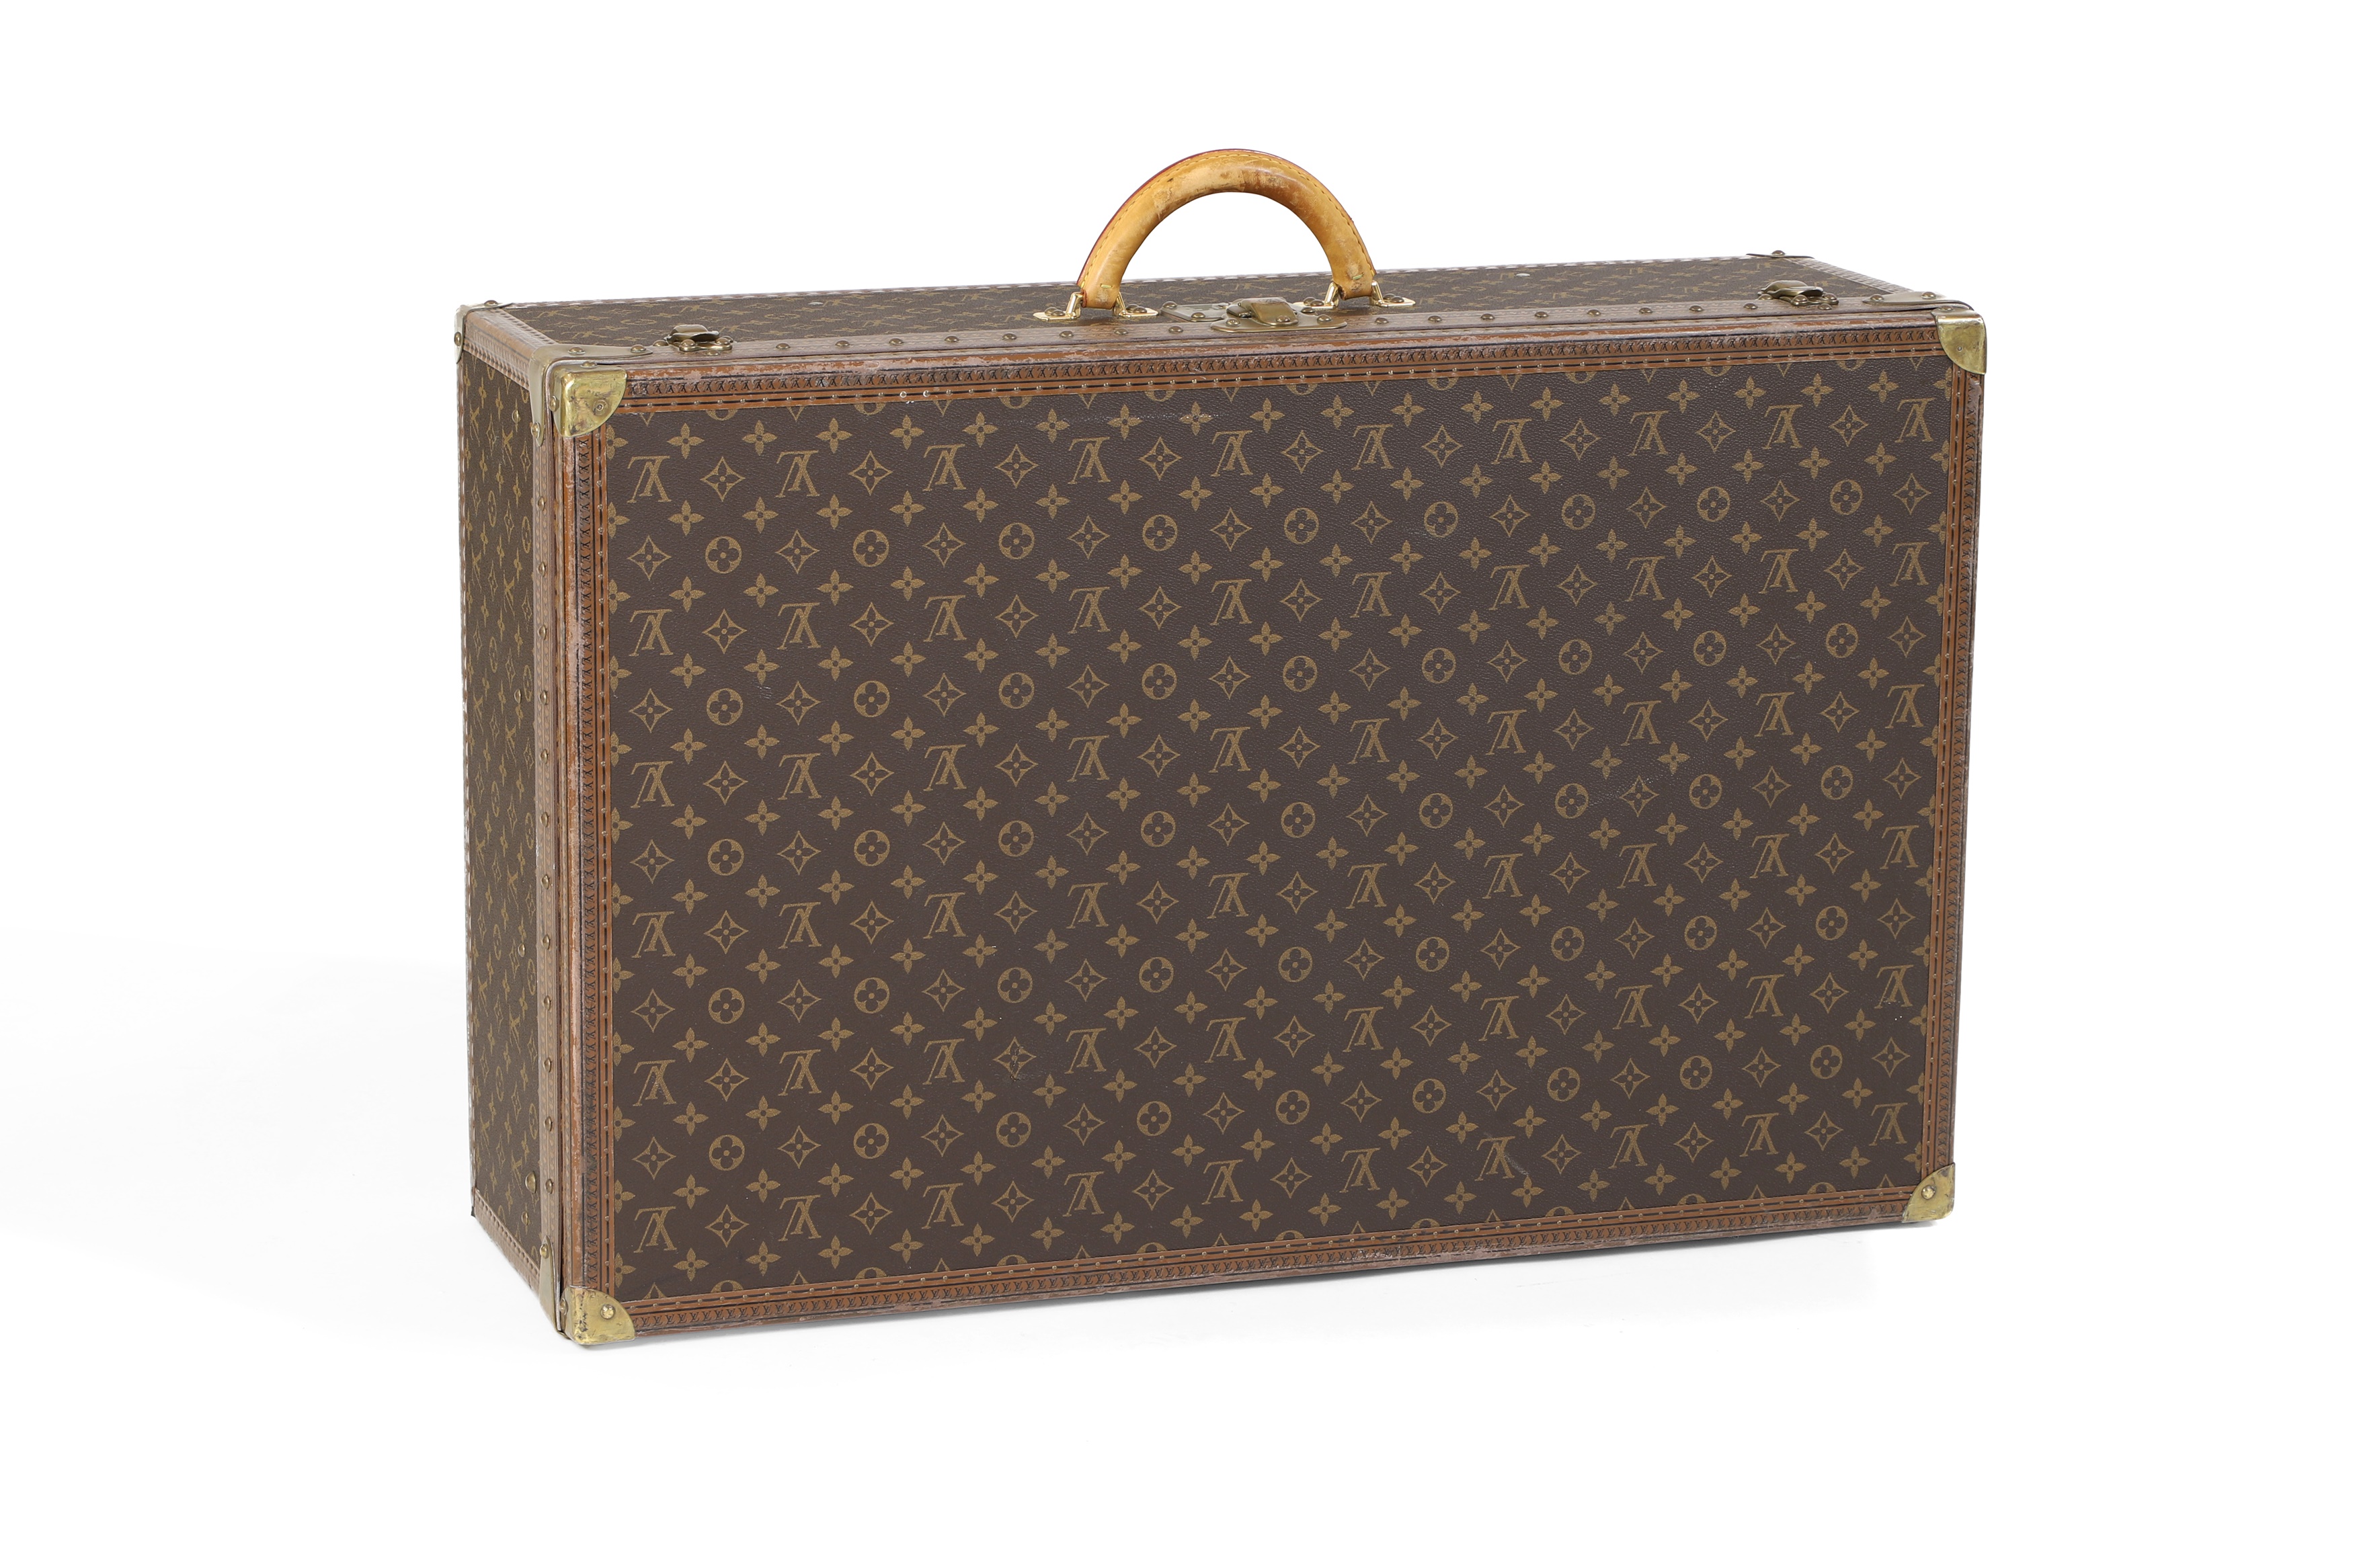 A Louis Vuitton monogrammed canvas English 'Alzer' suitcase (£1,200-1,800)